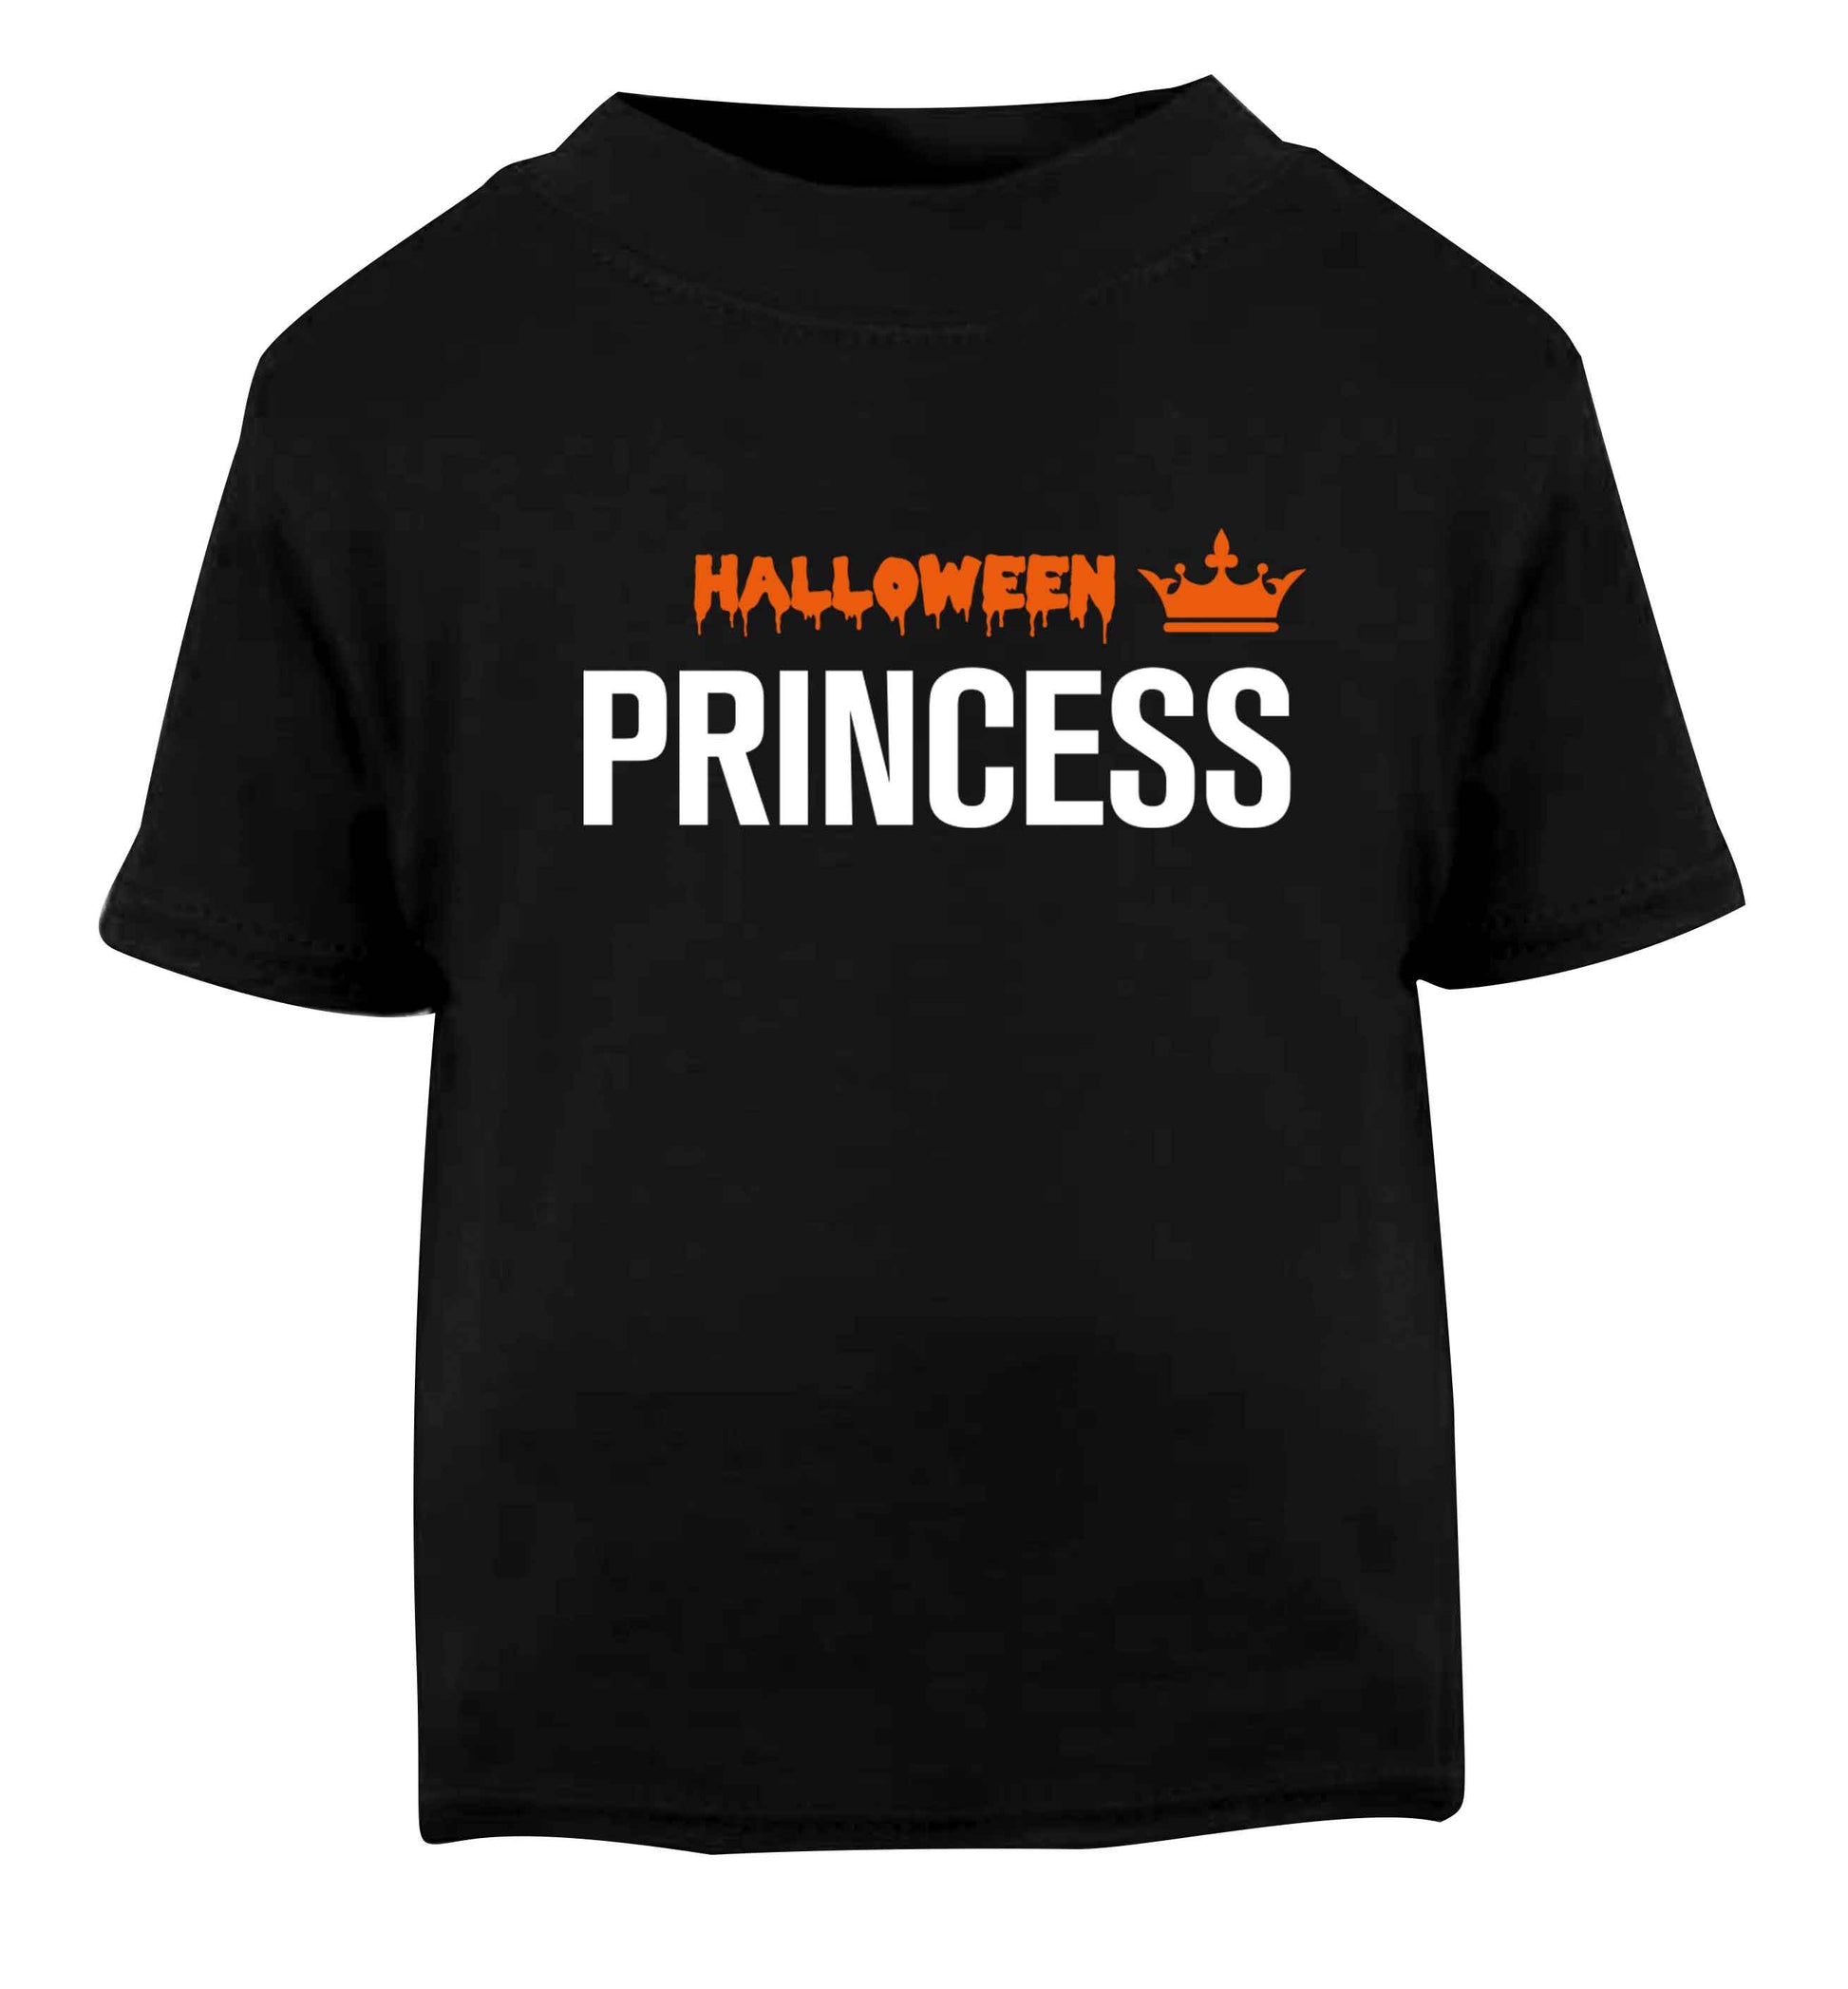 Halloween princess Black baby toddler Tshirt 2 years